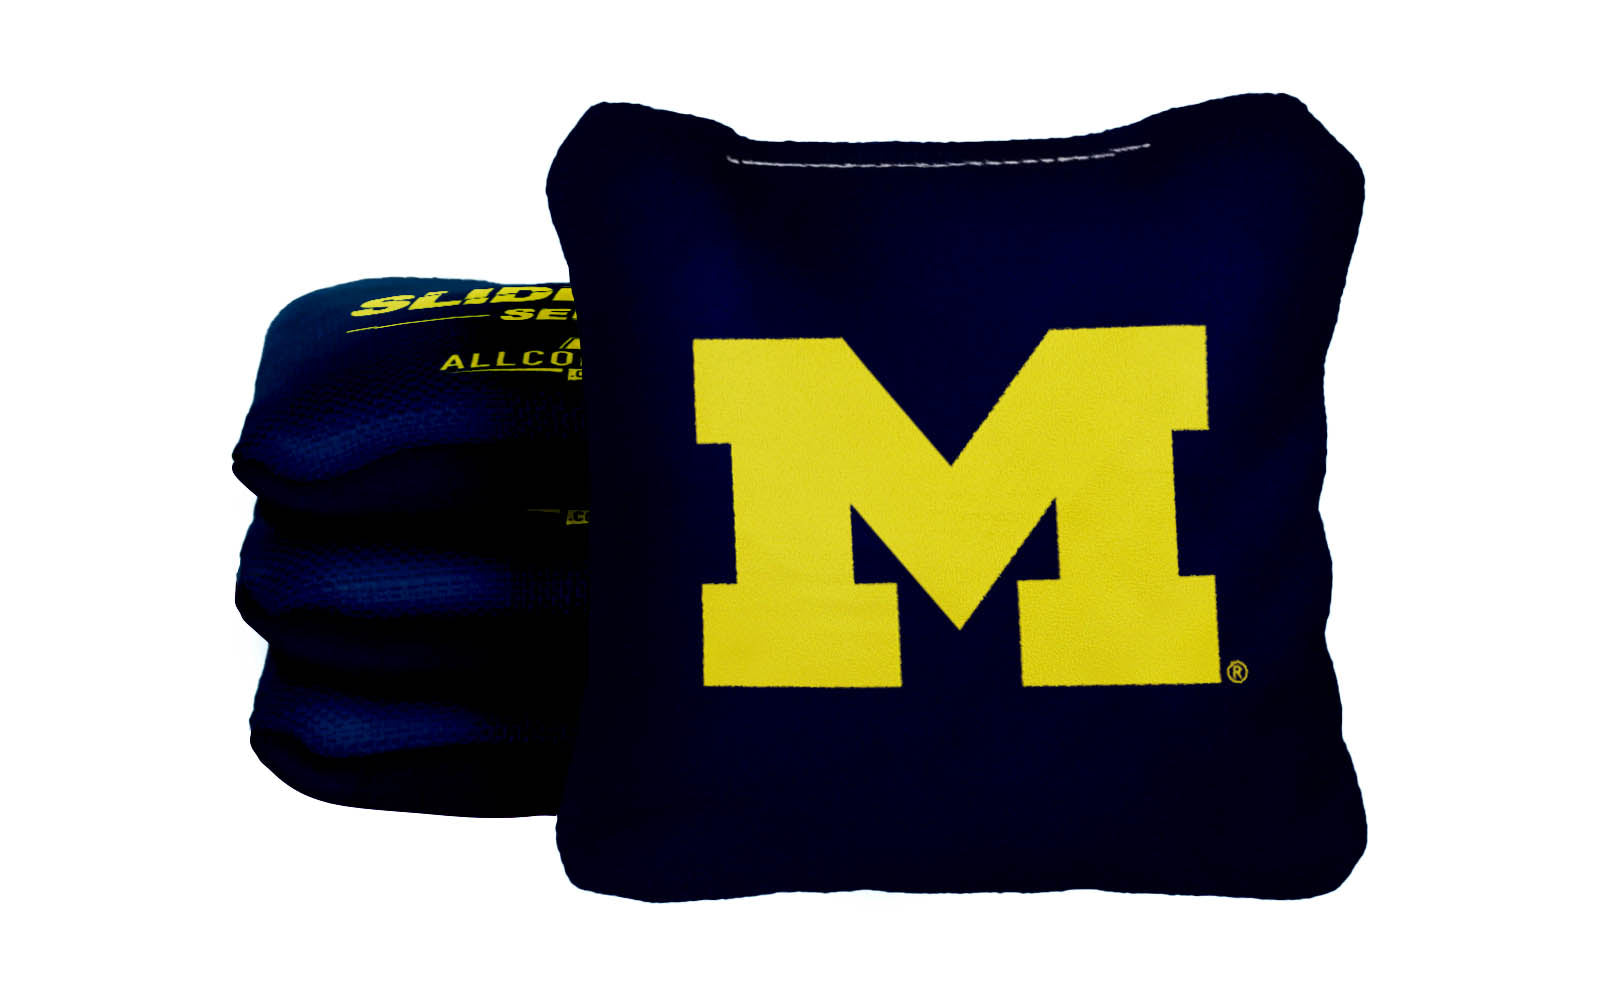 Officially Licensed Collegiate Cornhole Bags - Slide Rite - Set of 4 - University of Michigan